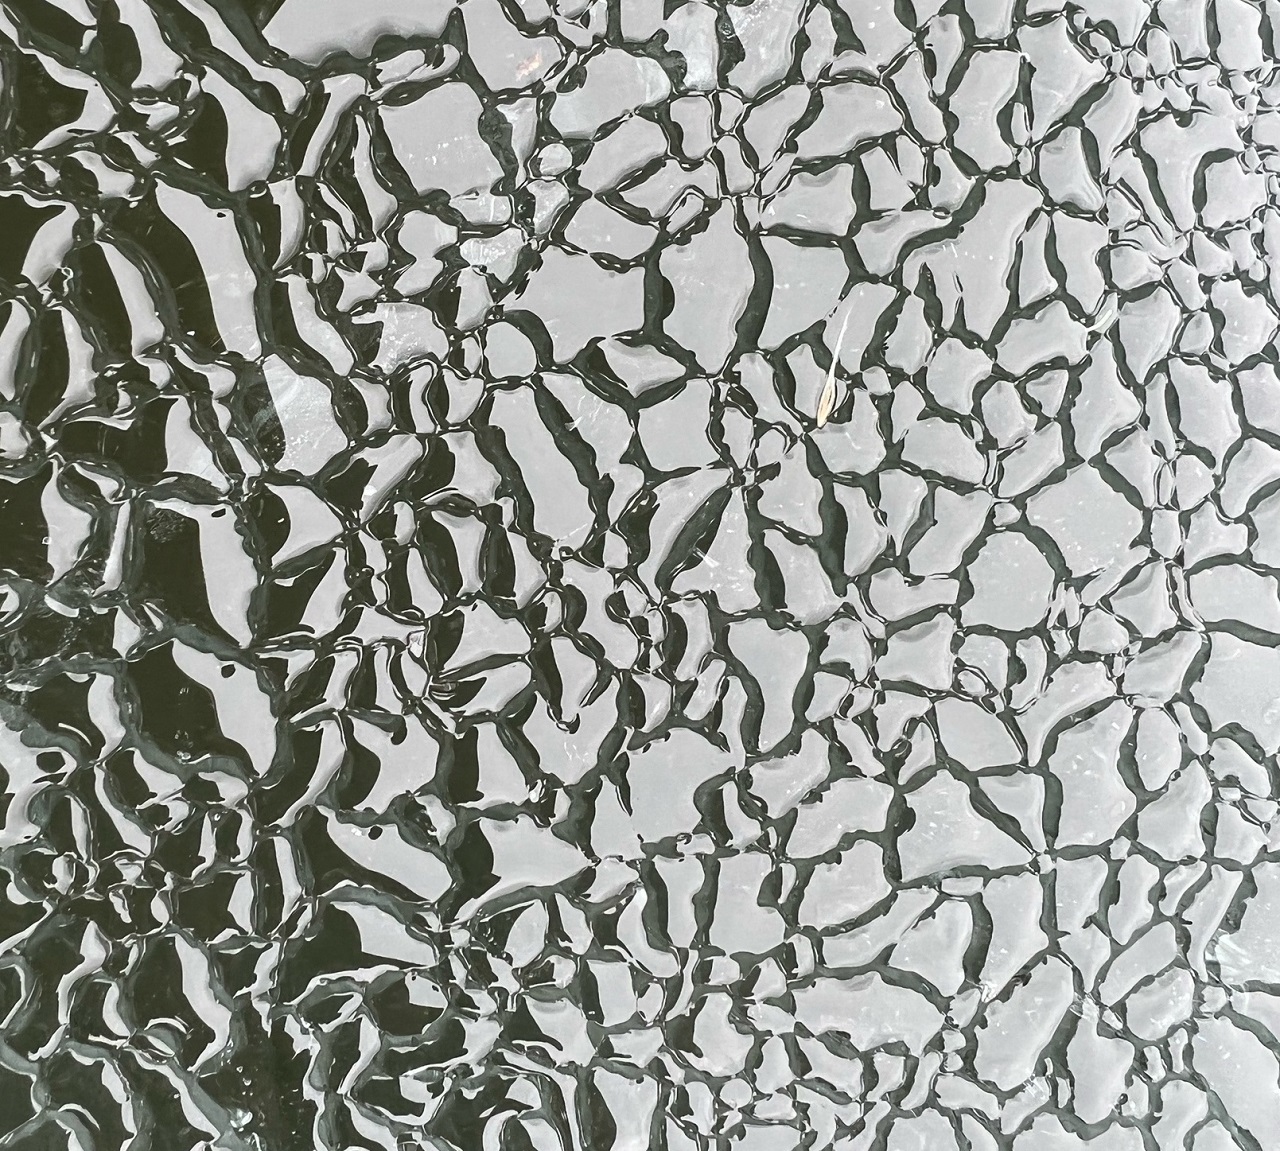 Кожаный лед на озере Тарай